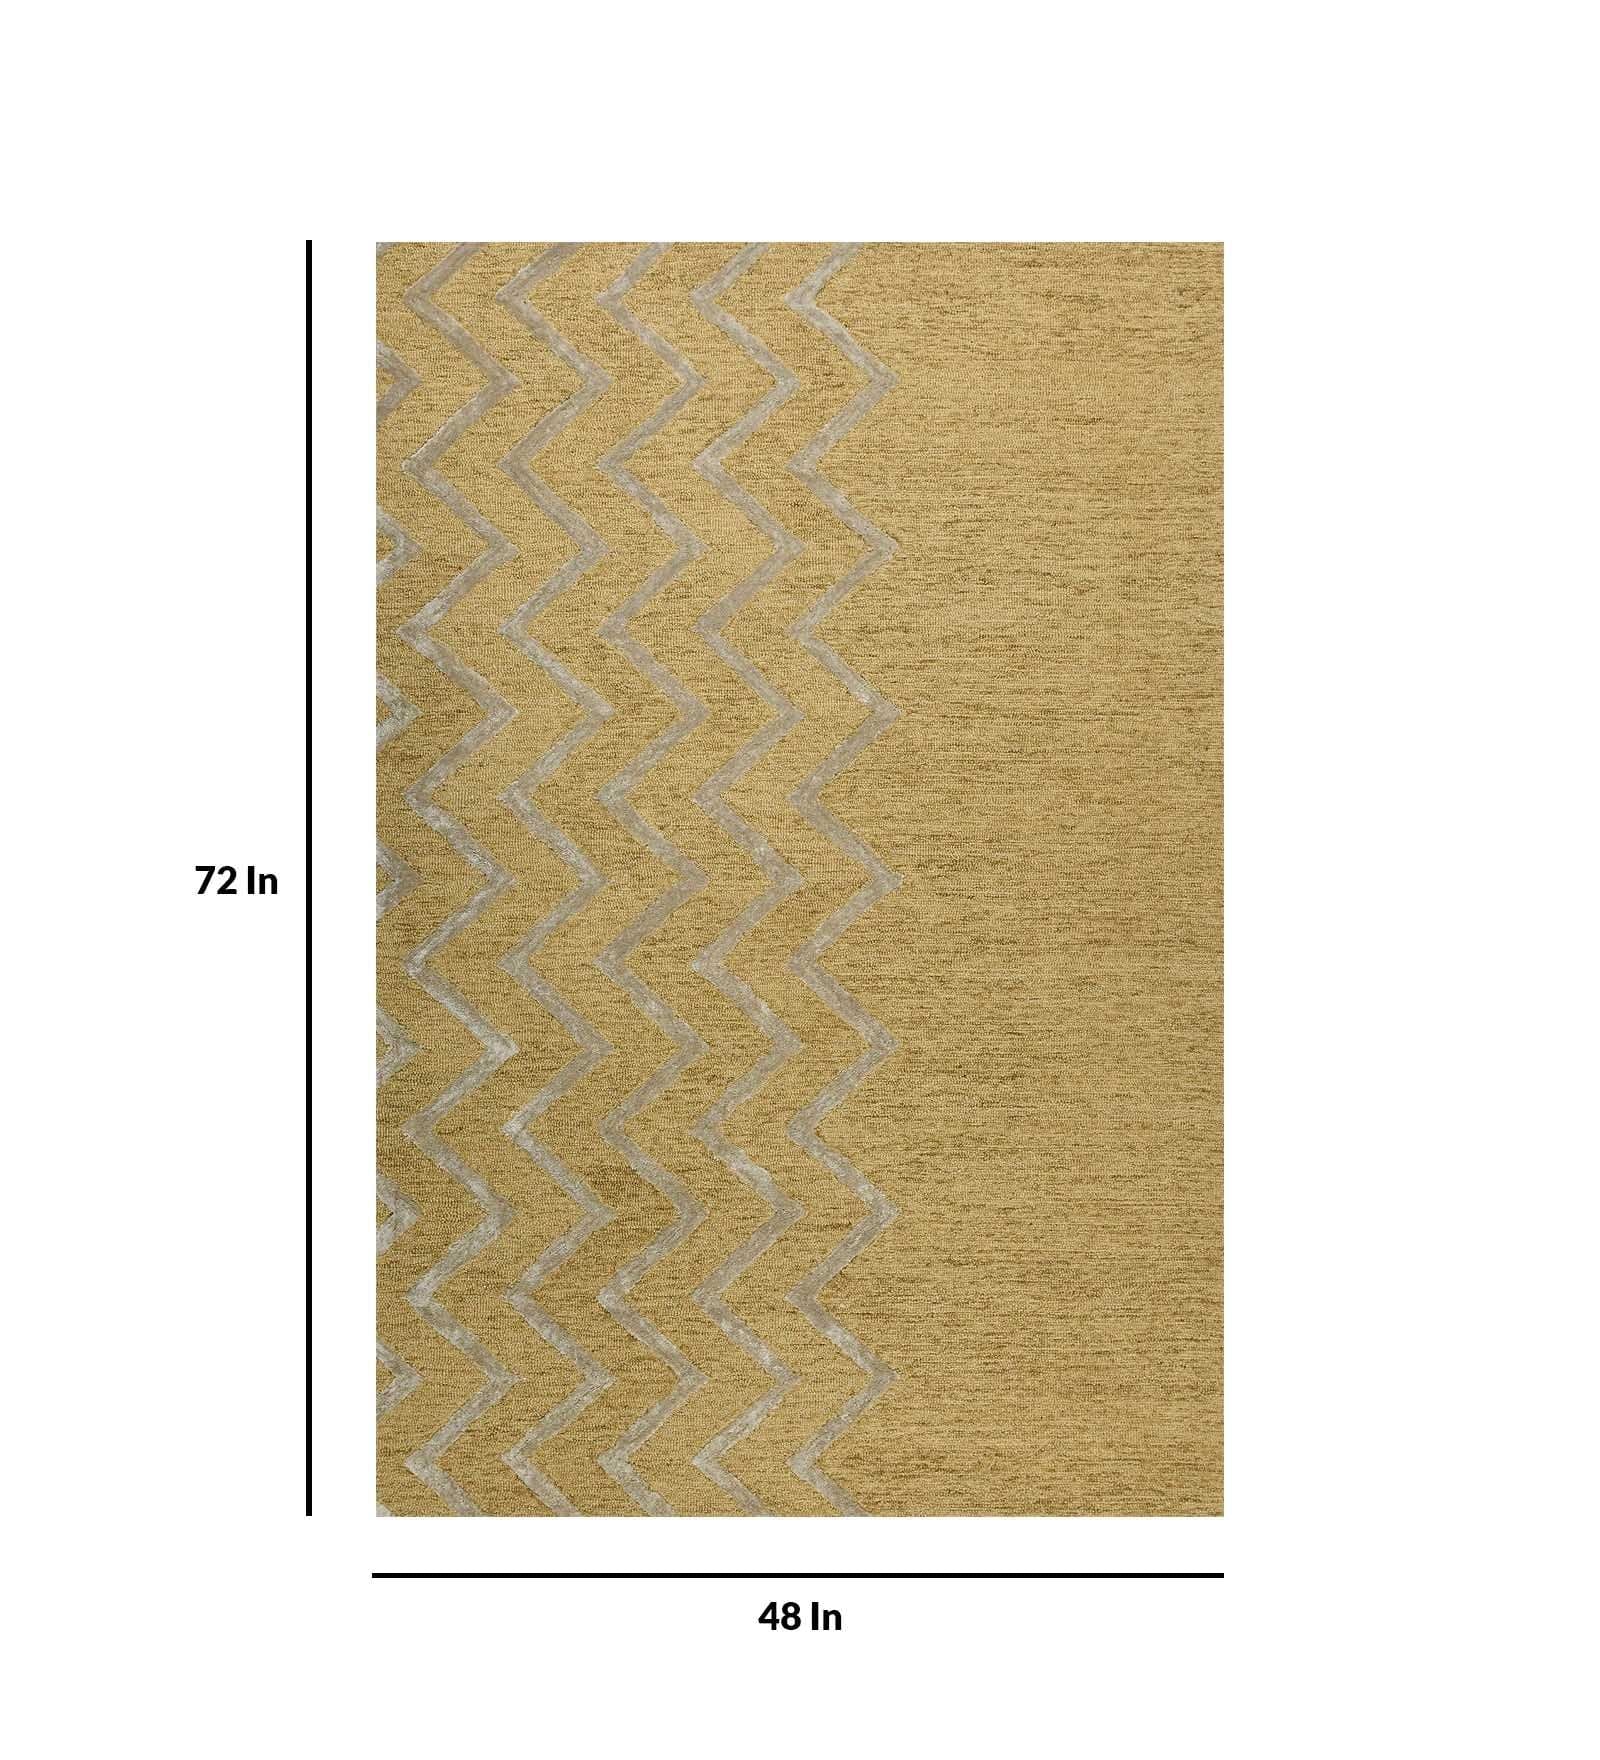 GOLD Wool & Viscose Canyan 4x6 Feet  Hand-Tufted Carpet - Rug